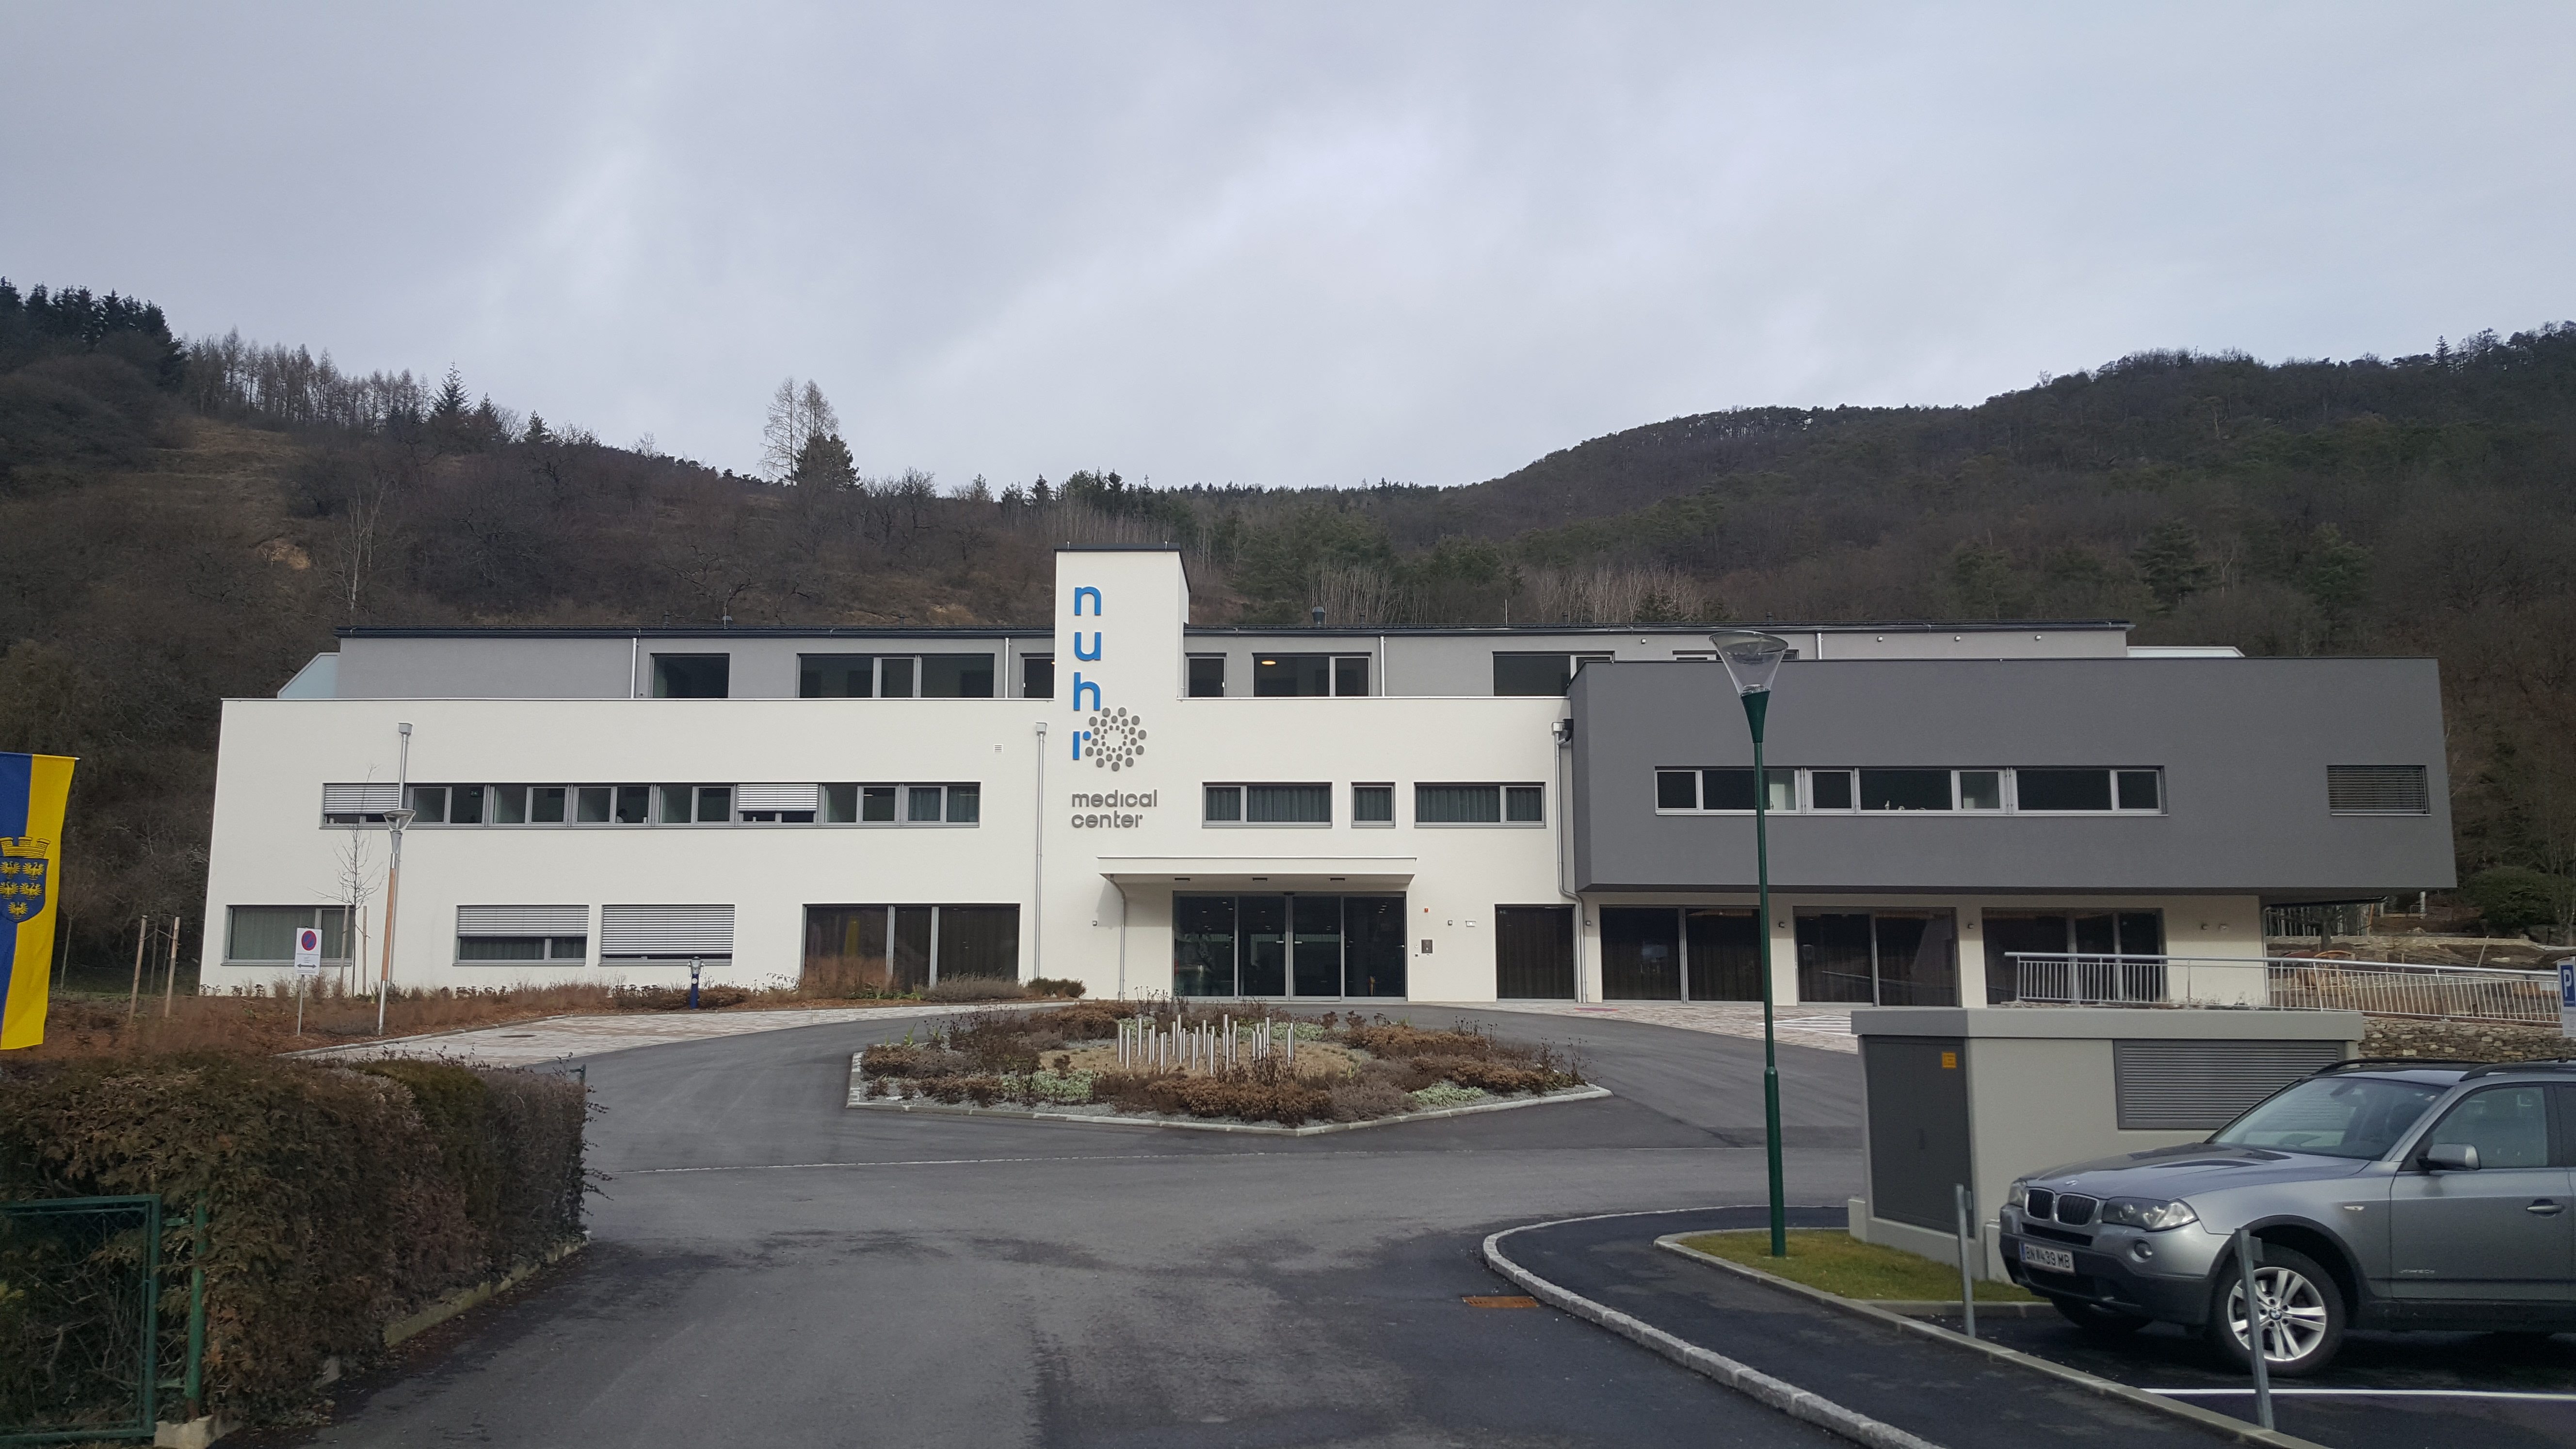 Nuhr Medical Center - Budownictwo lądowe naziemne